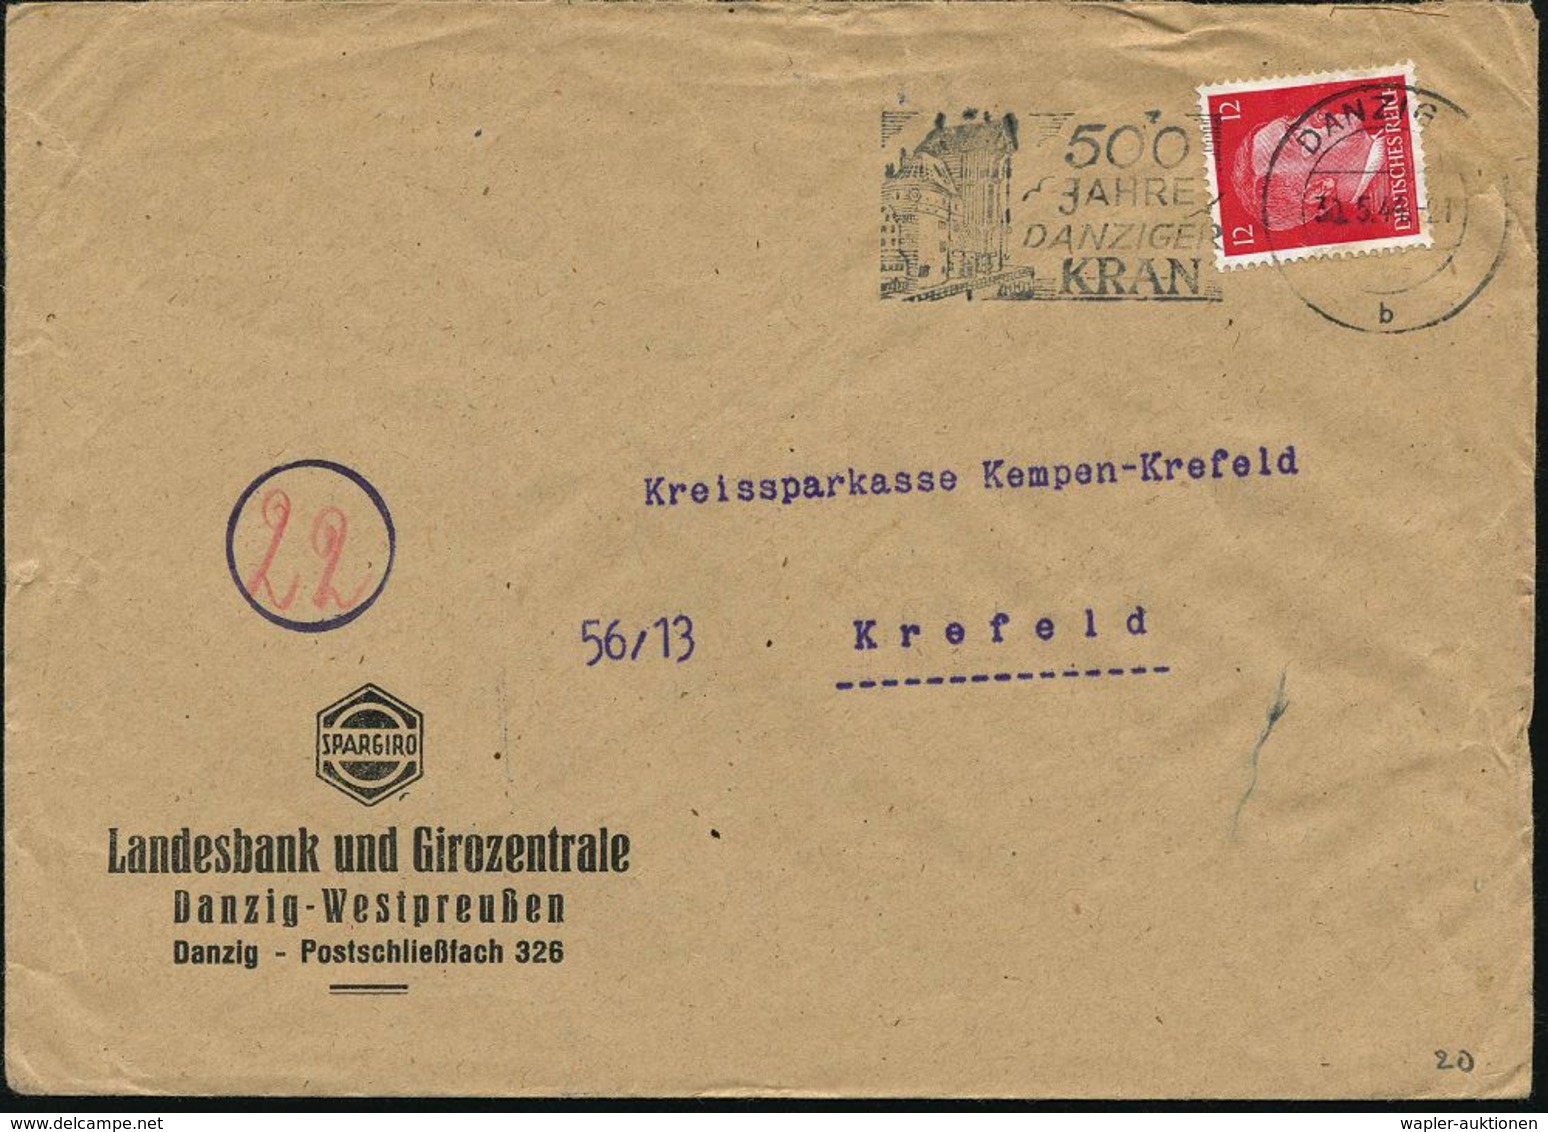 BERÜHMTE BAUWERKE & MONUMENTE : DANZIG 5/ B/ 500/ JAHRE/ DANZIGER/ KRAN 1944 (30.5.) MWSt = Krantor , Firmen-Bf.: Landes - Monumenti